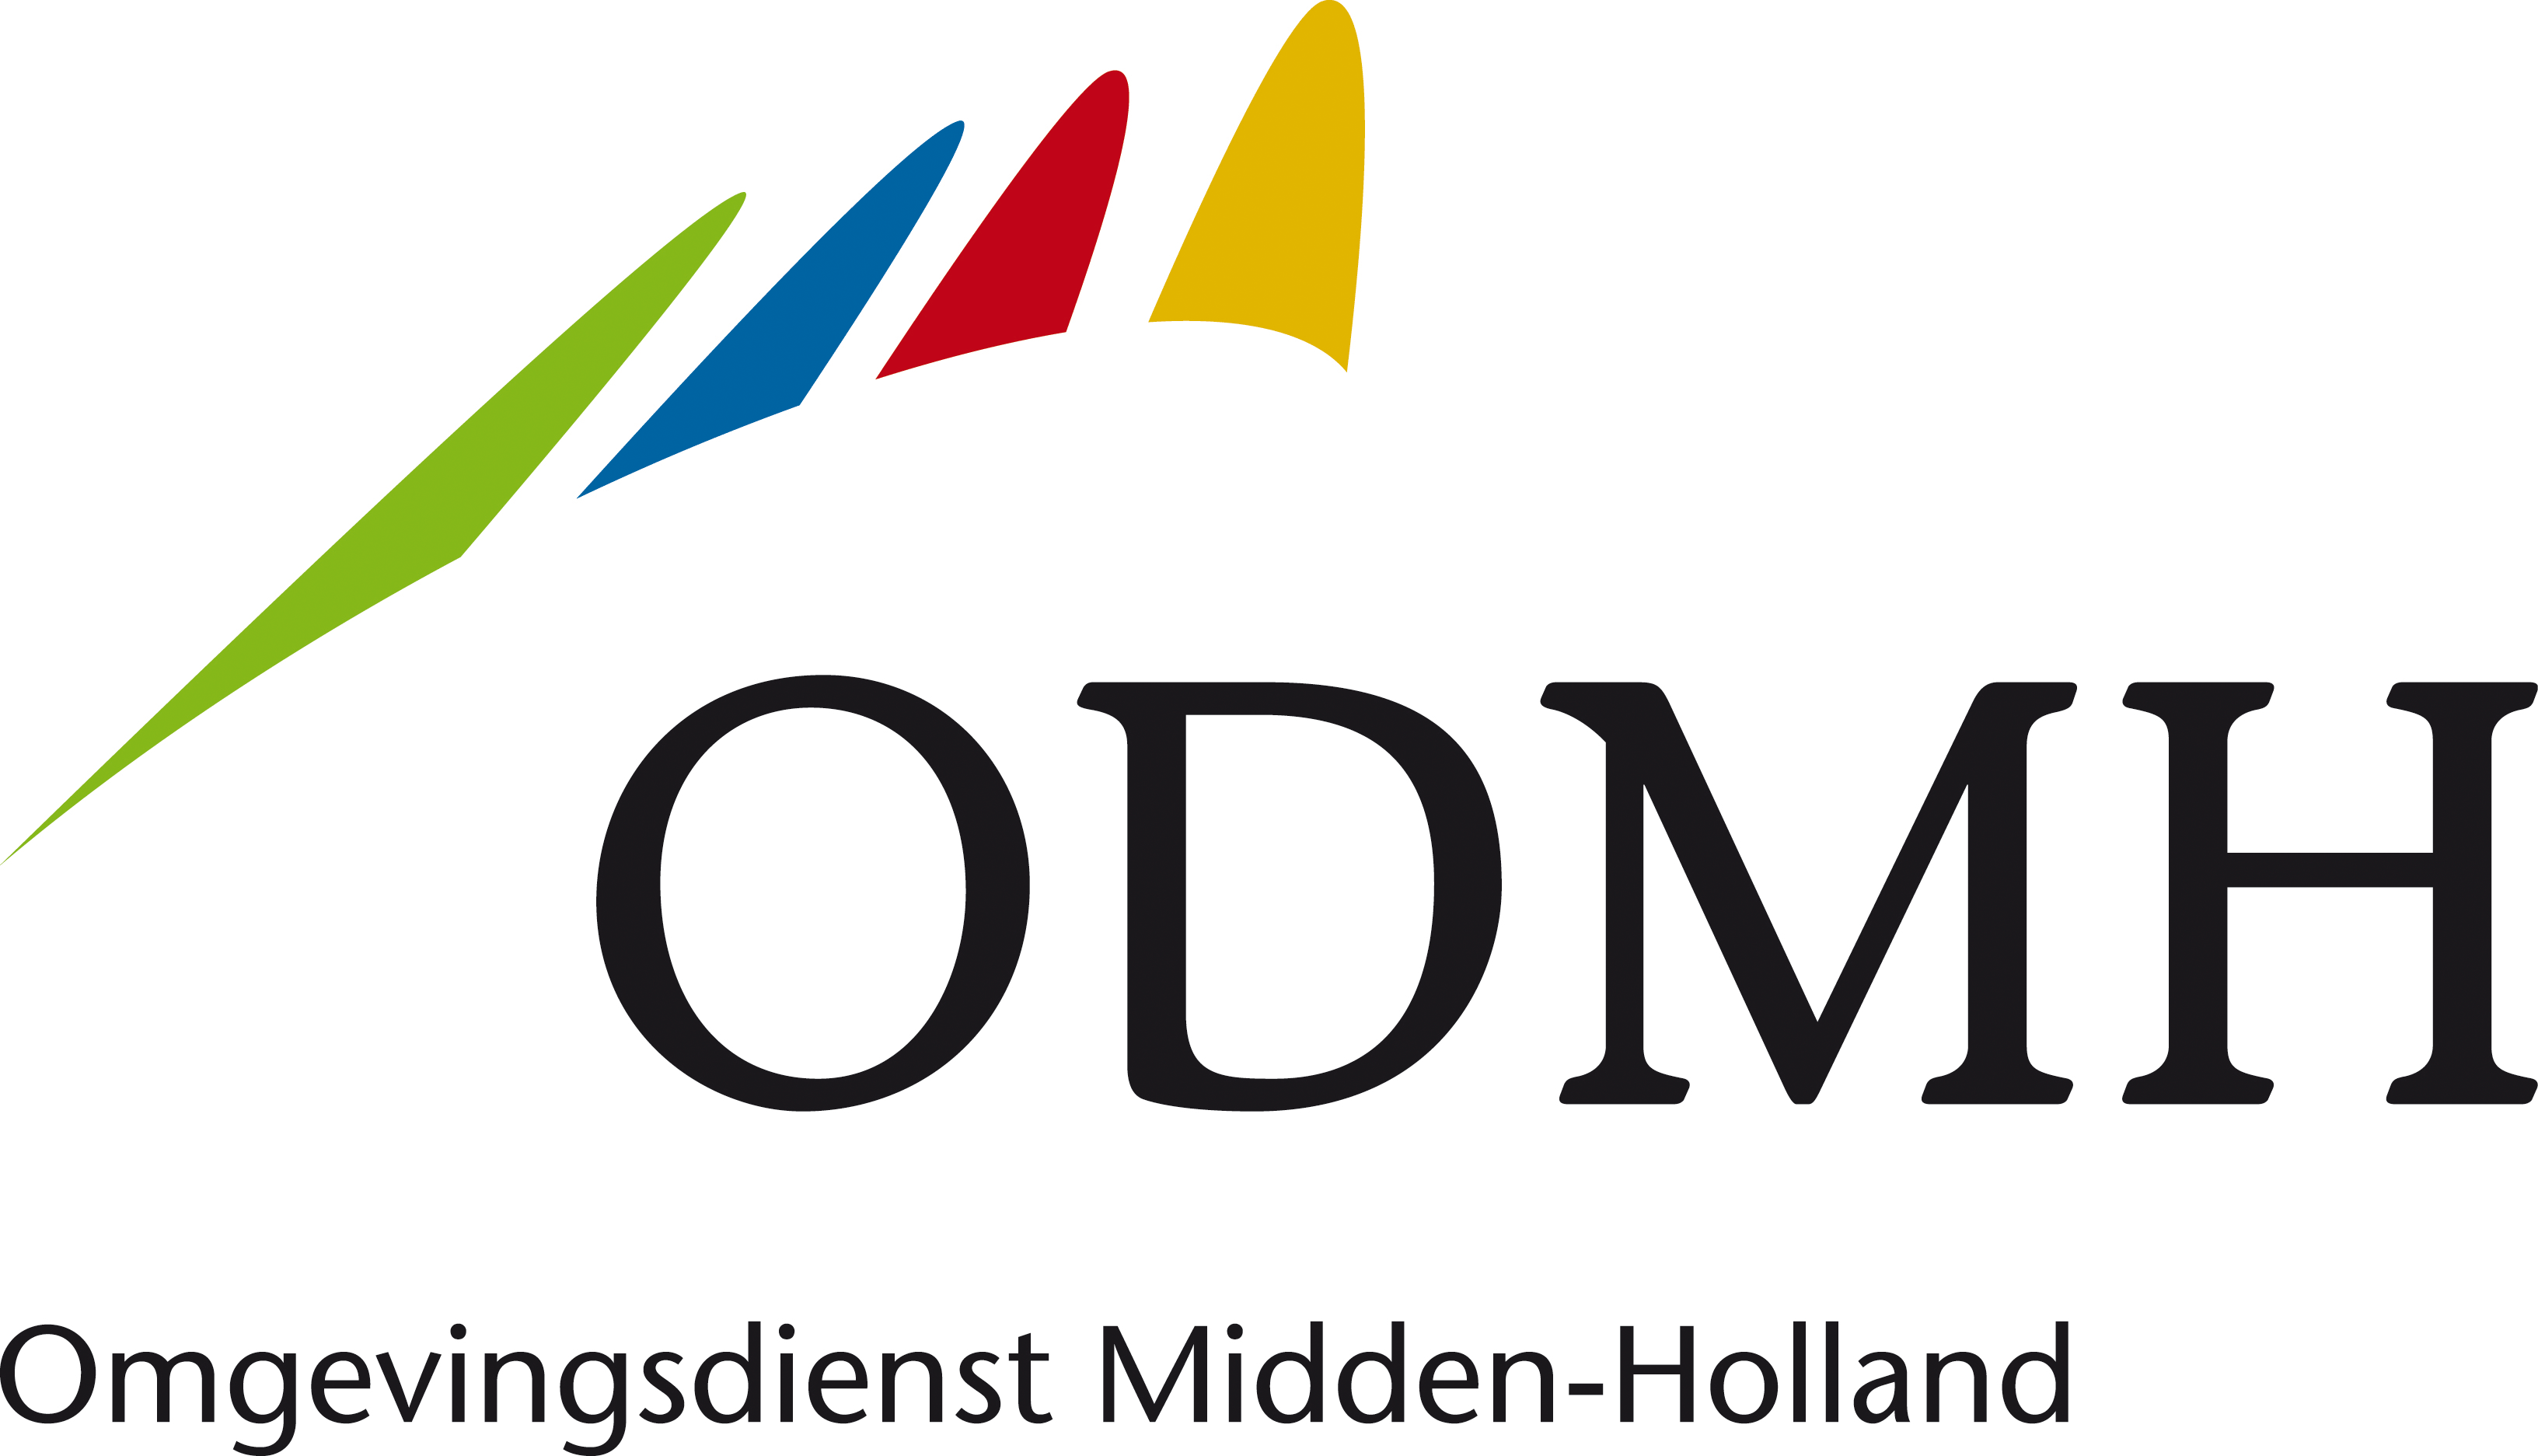 ODMH-logo CMYK